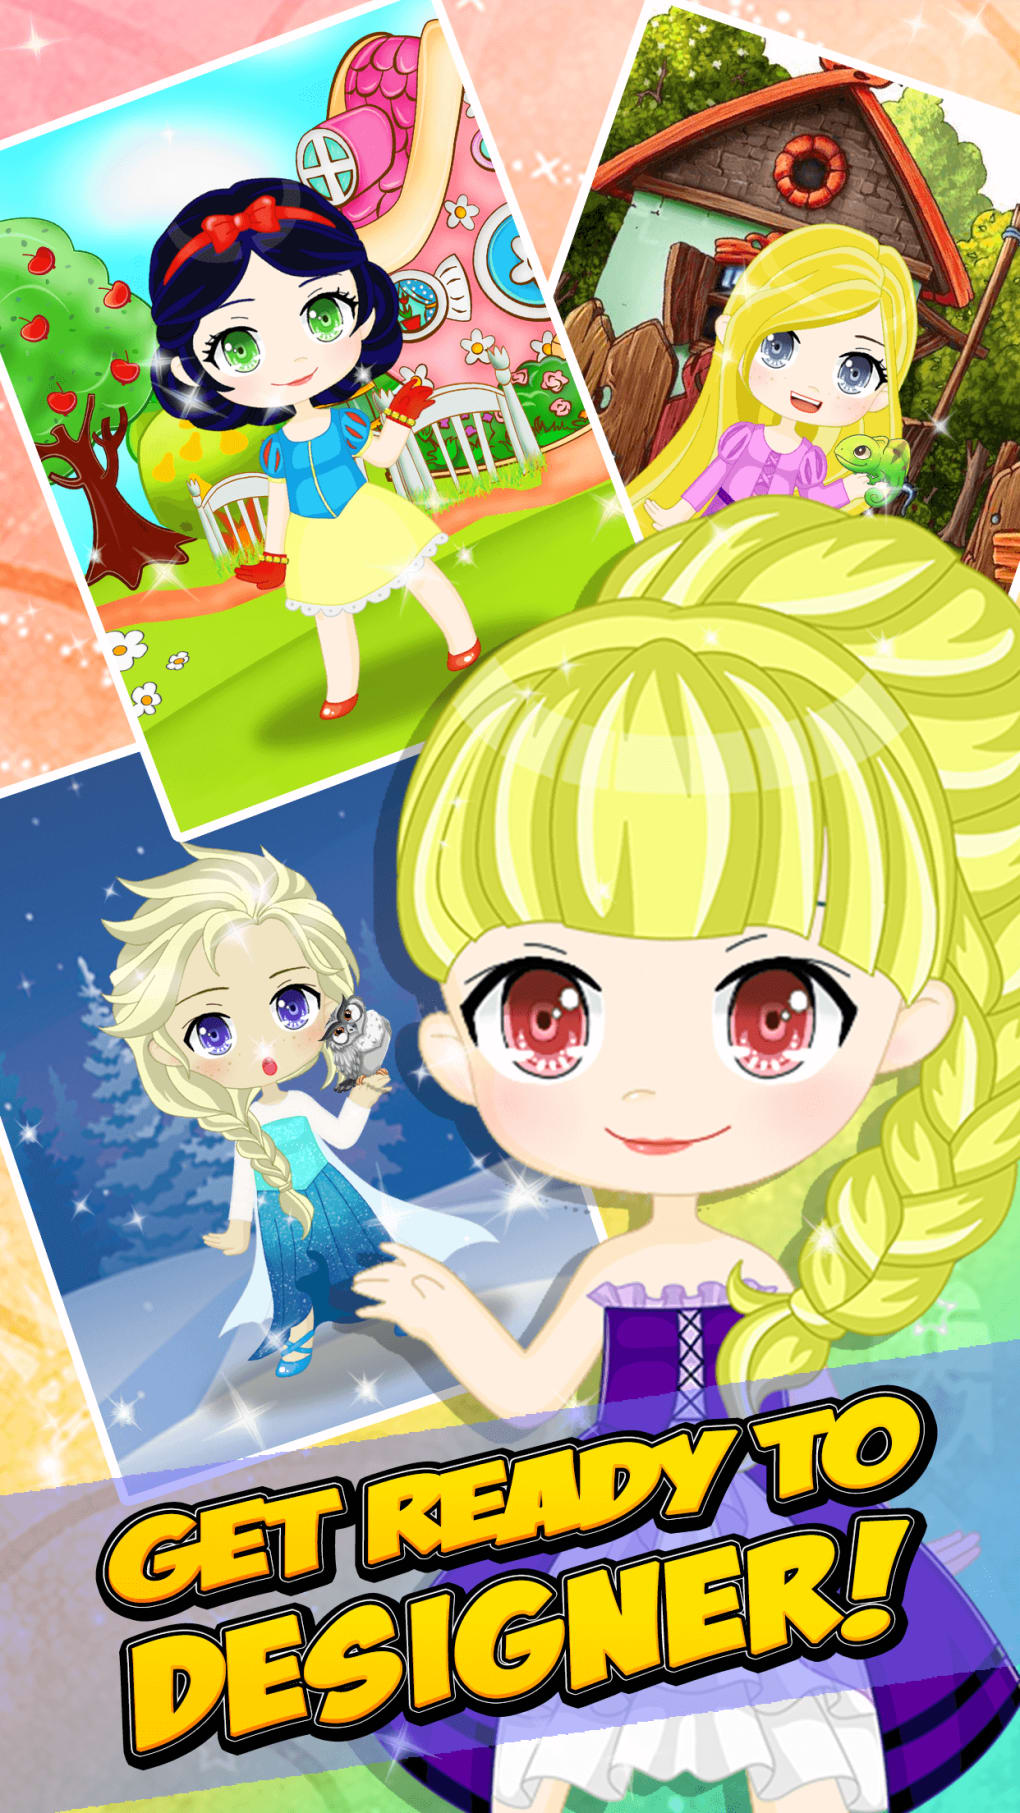 Chibi Princess Maker - Cute Anime Creator Games для iPhone — Скачать